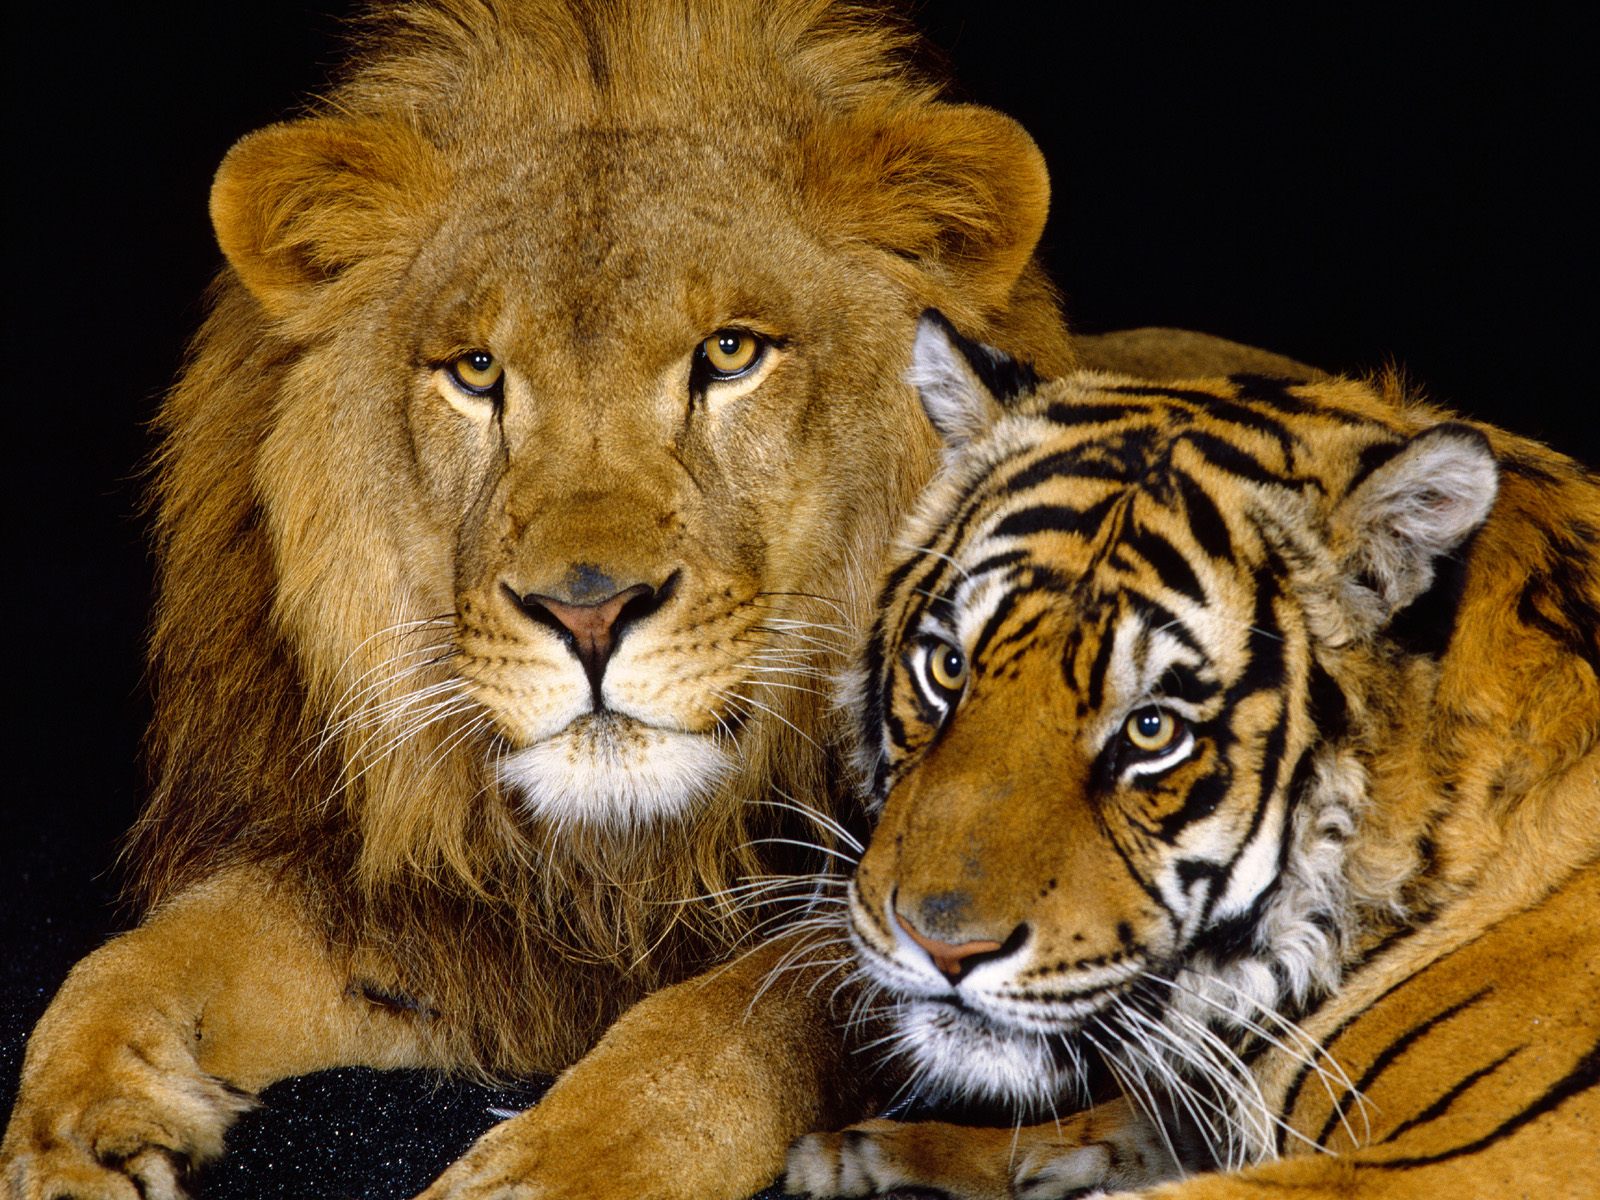 074-animal-wallpapers-animal-wallpapers-lion-tiger.jpg